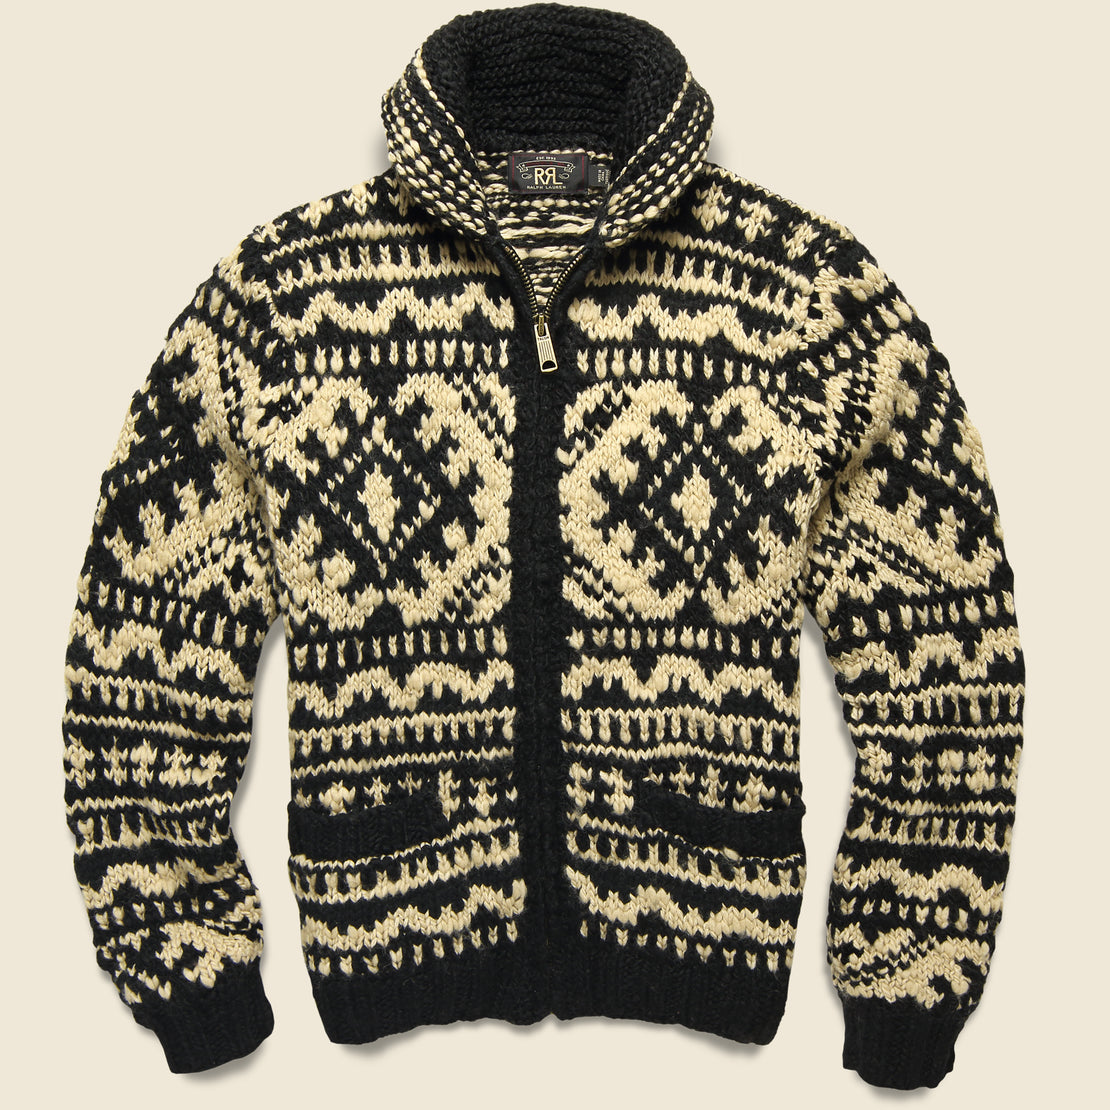 RRL Hand-Knit Wool Full-Zip Sweater - Cream/Black